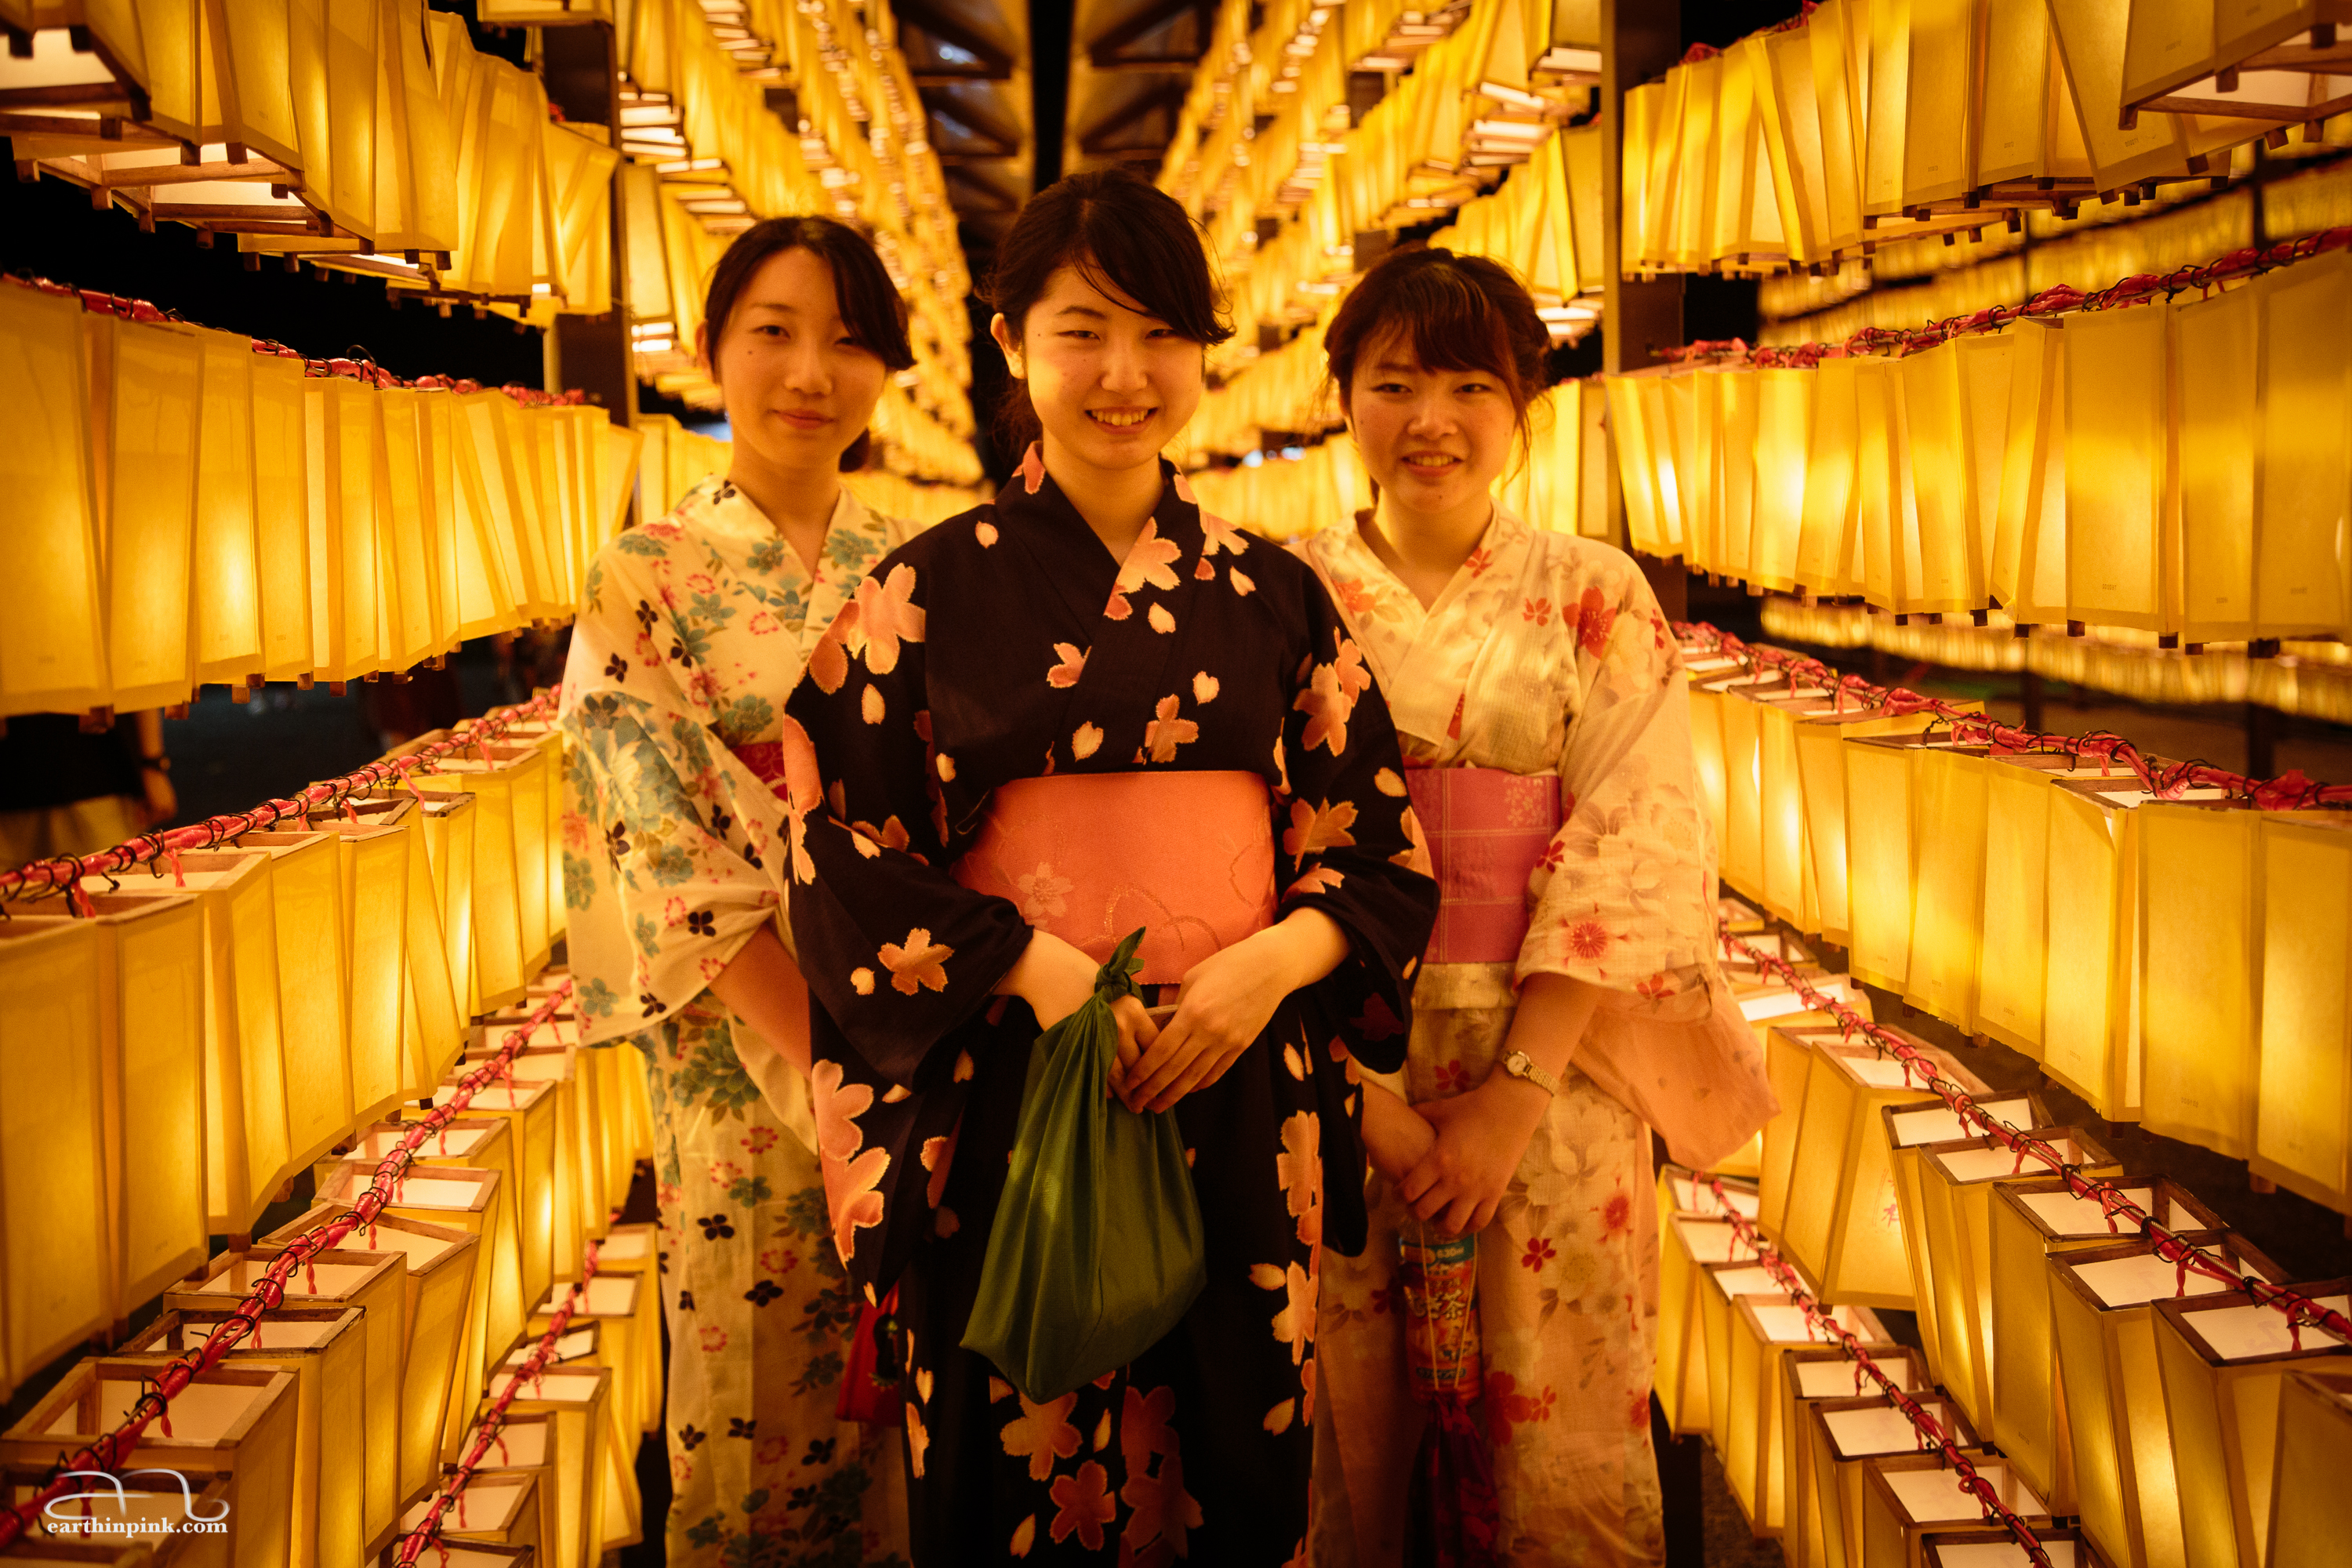 Girls wearing traditional summer yukatas stroll among the lanterns in front of Yasukuni shrine.